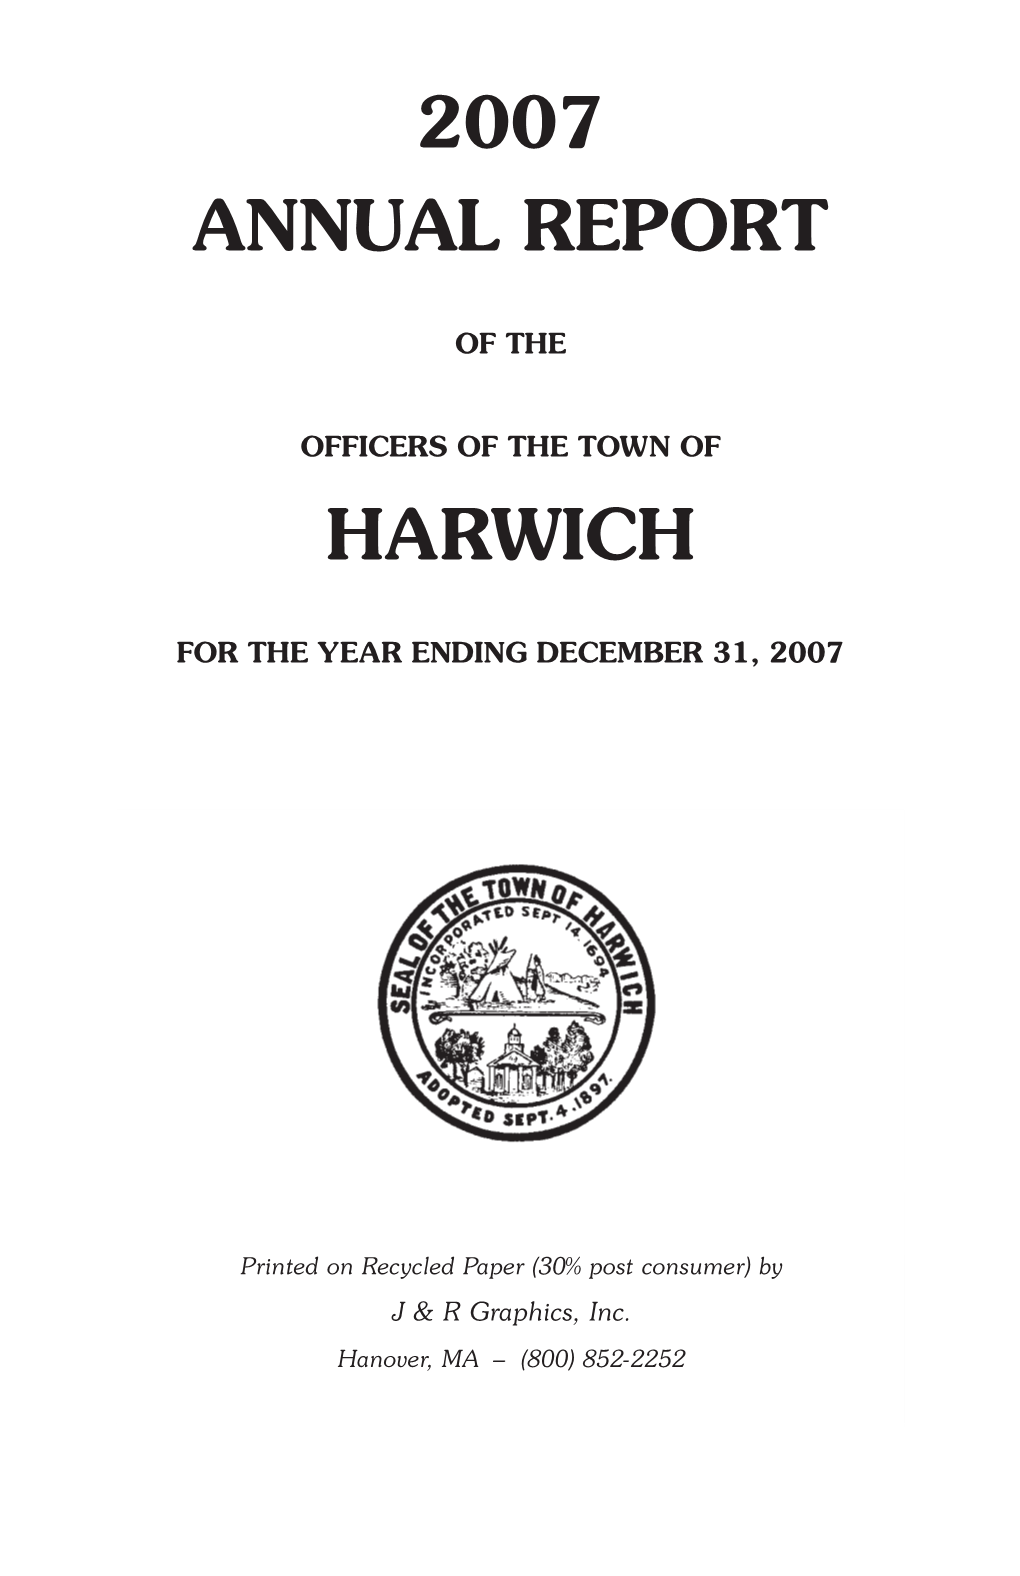 2007 Annual Report Harwich